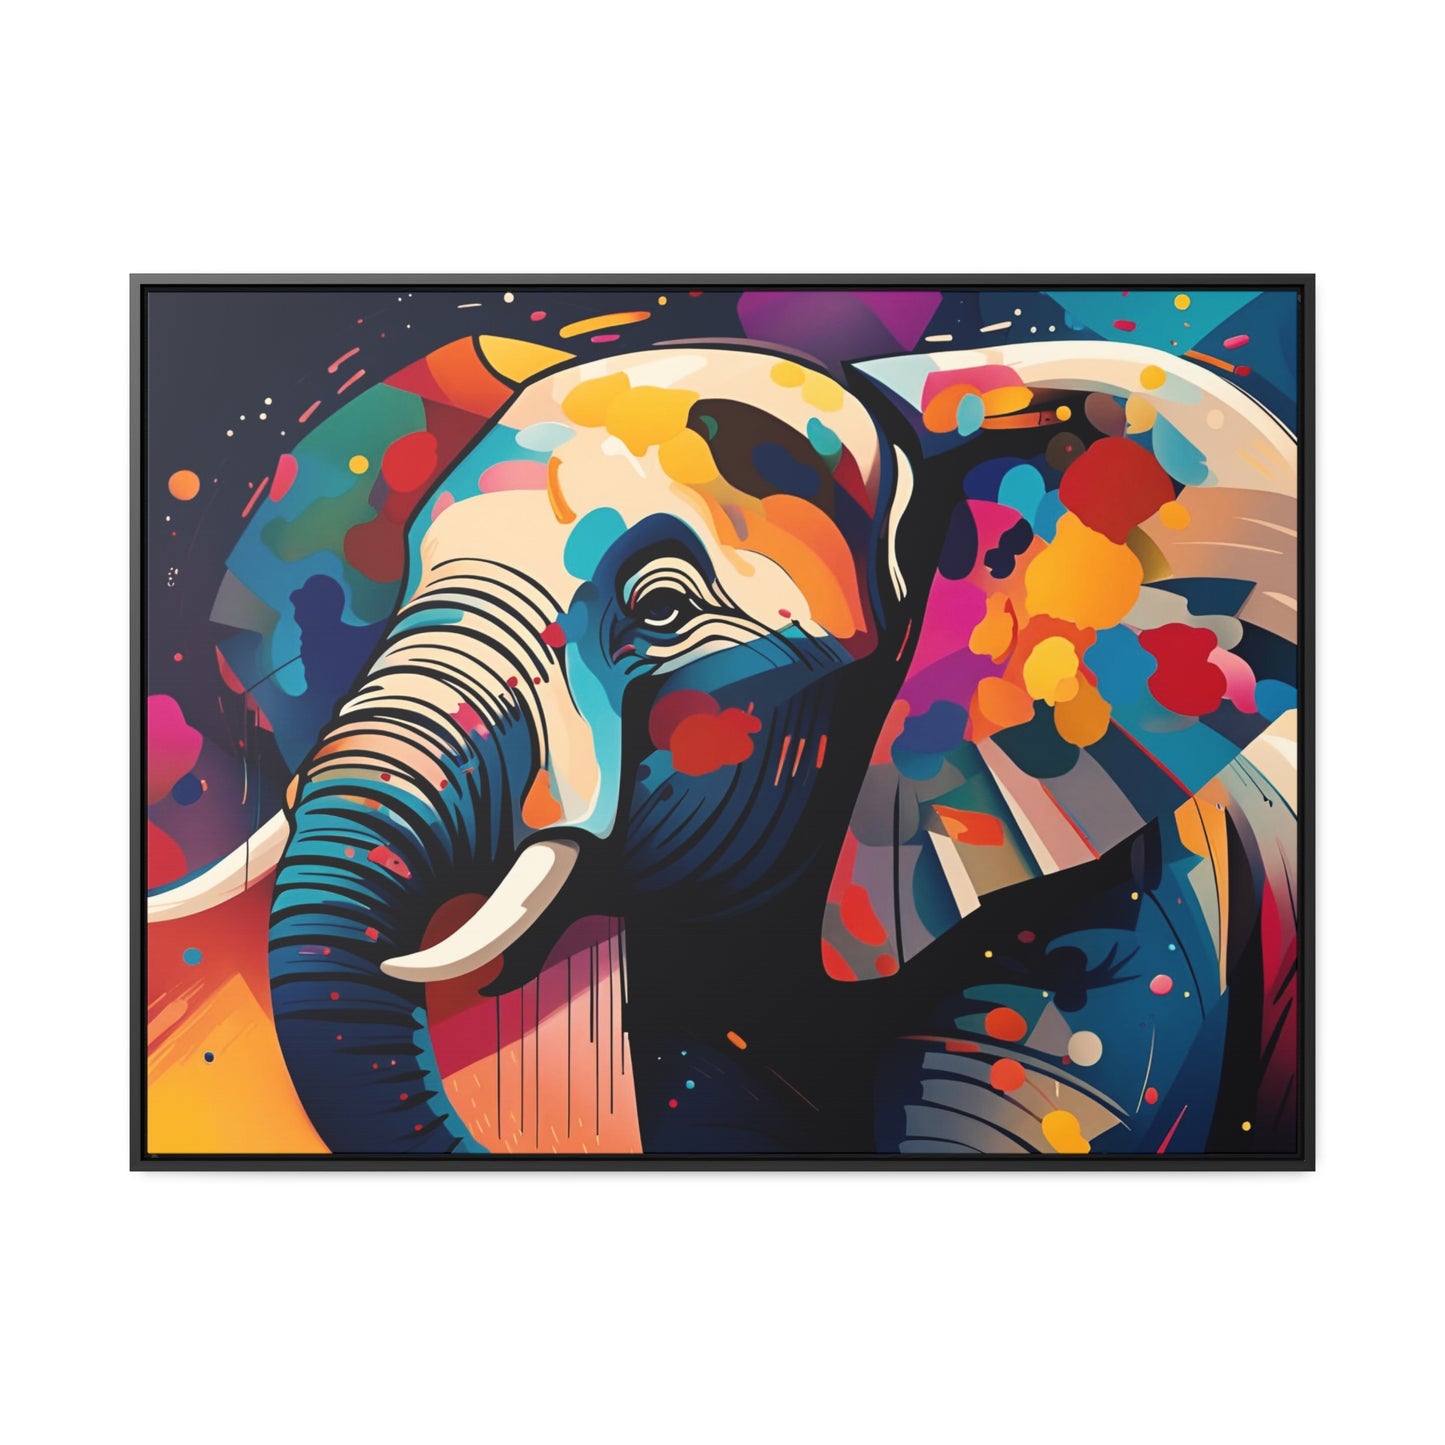 Elephant themed Wall Art - Multicolor Elephant Head Print on Canvas in a Floating Frame